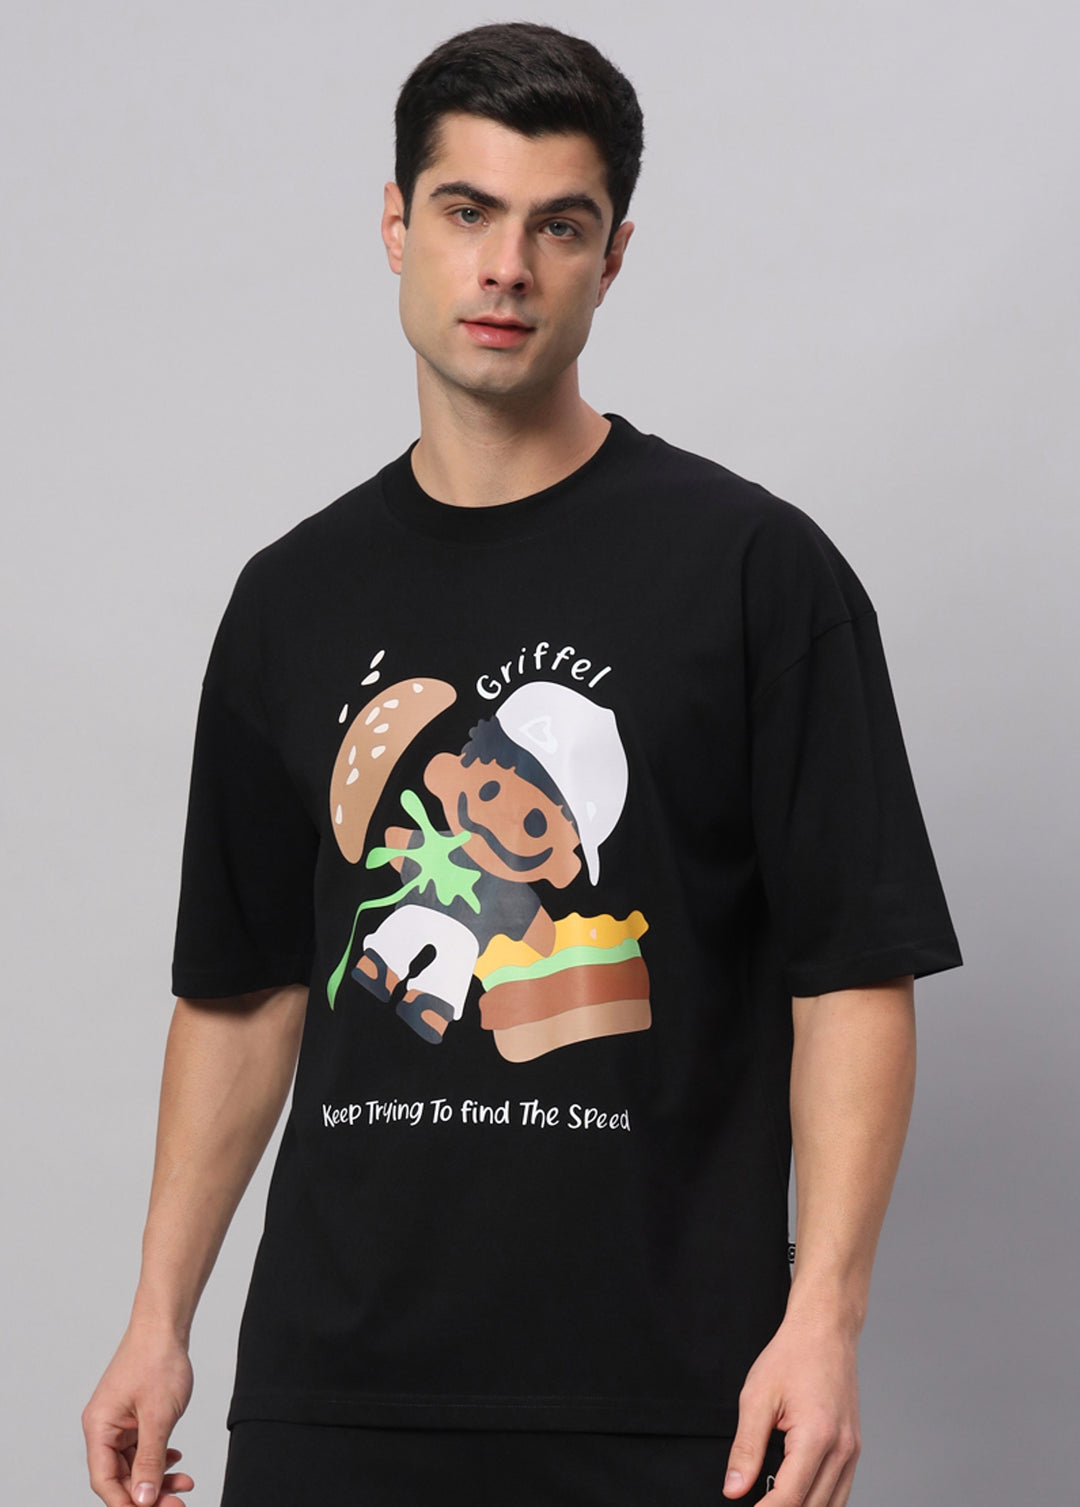 Burger Drop Shoulder Oversized T-shirt - griffel